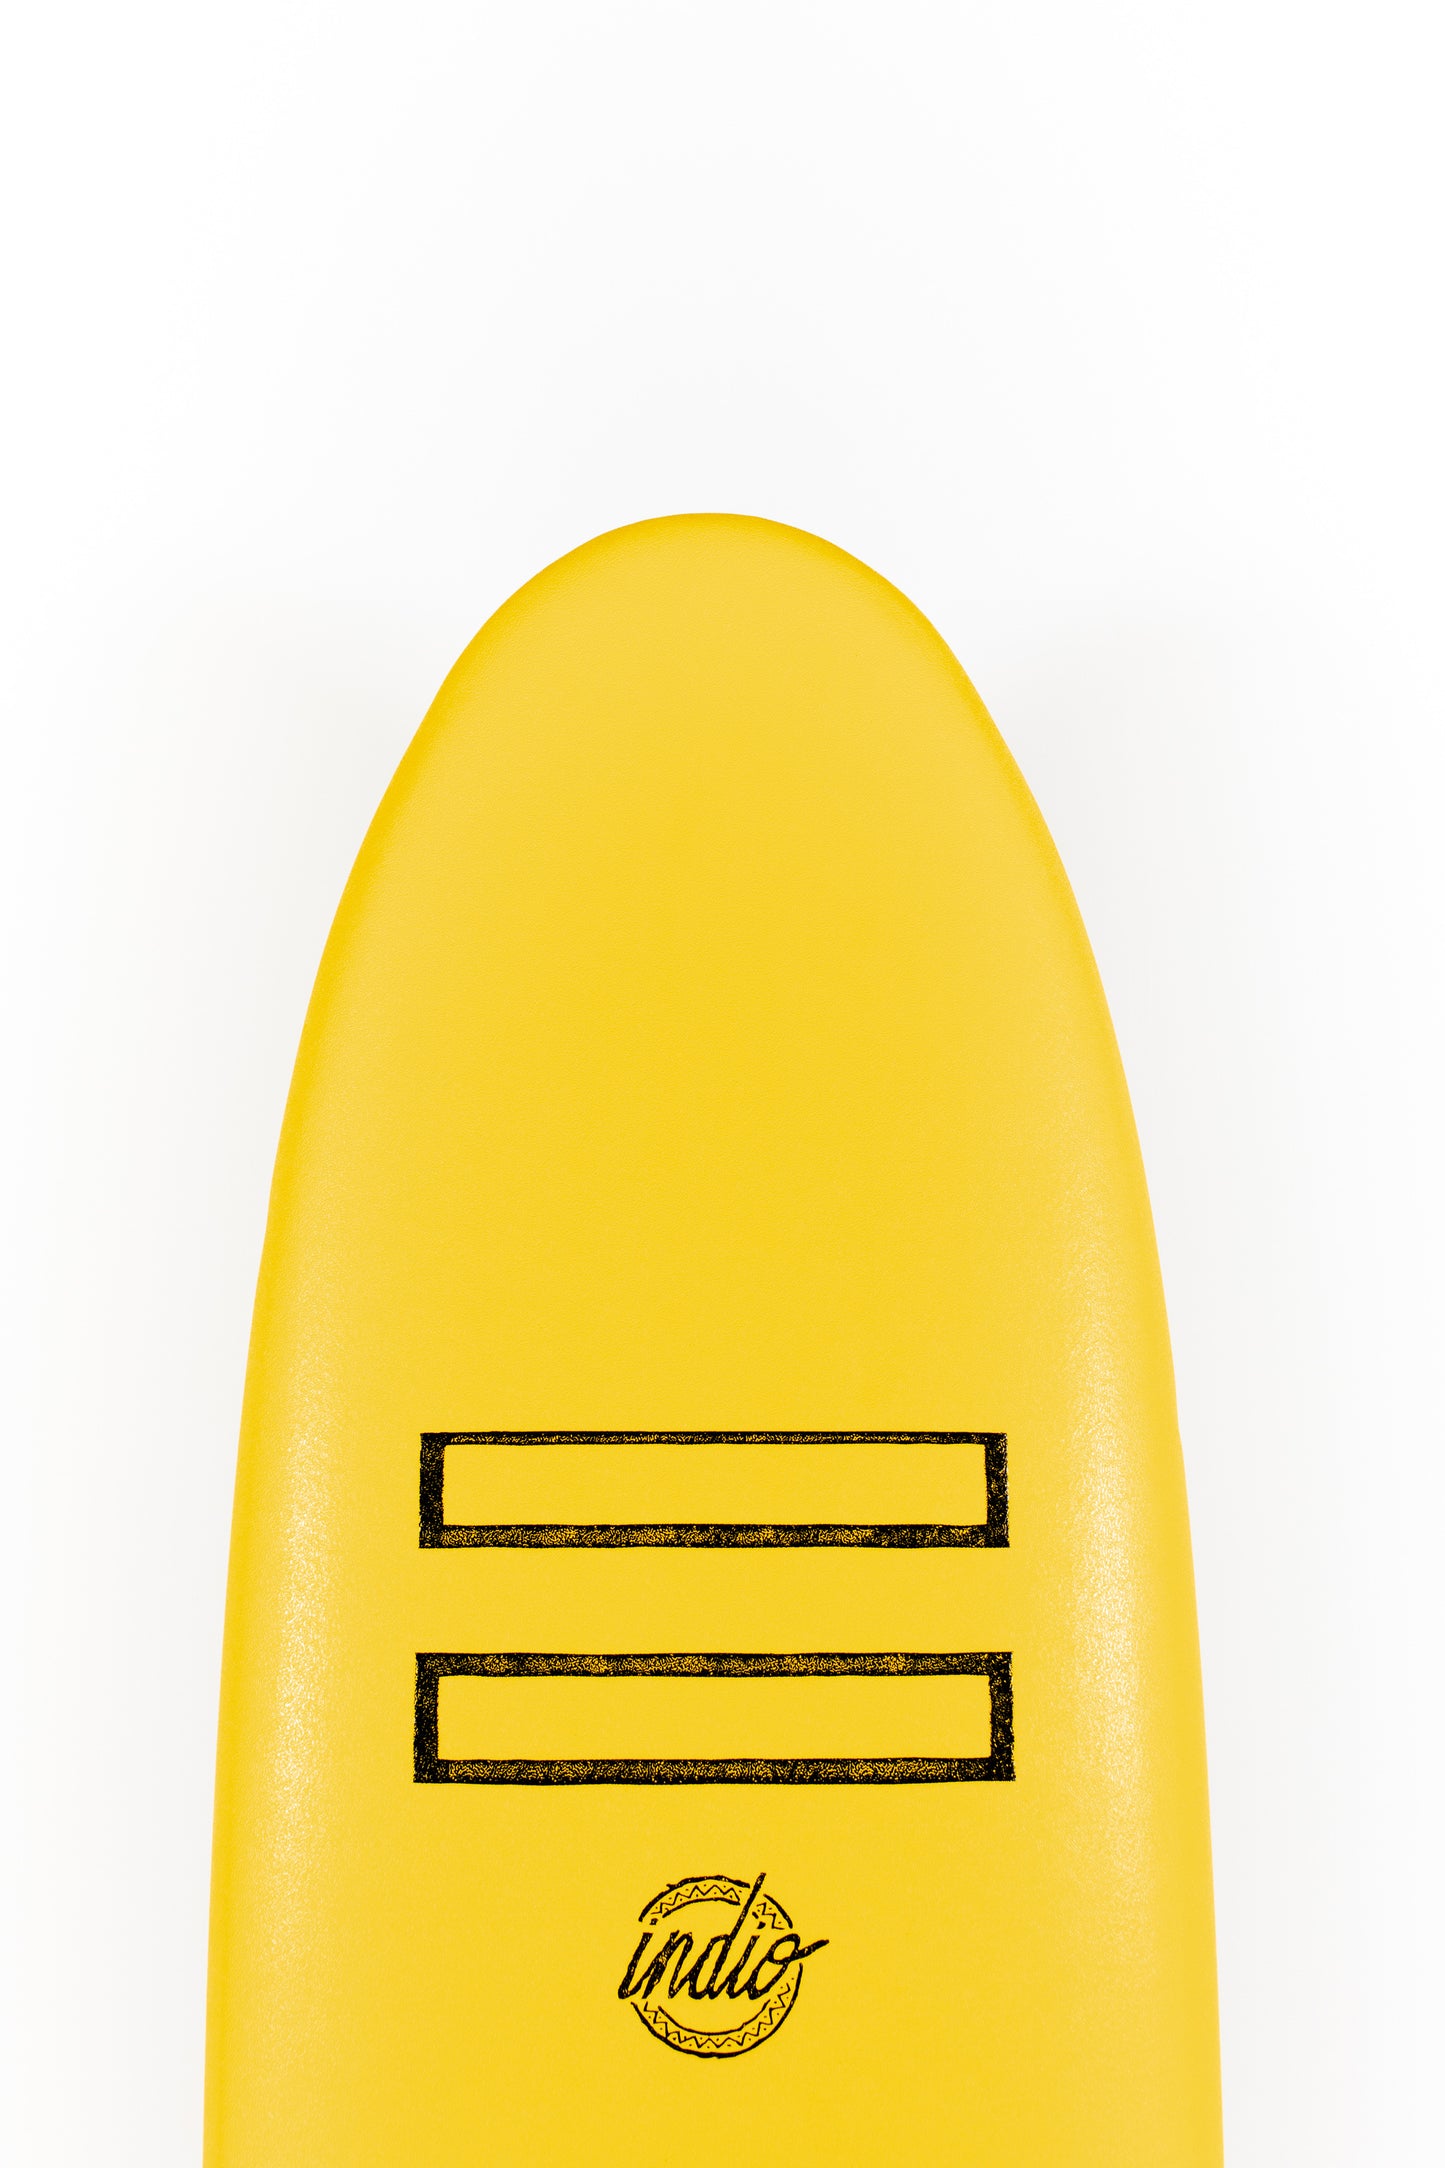 
                  
                    Pukas-Surf-Shop-Indio-Surfboards-Softboards-Easy-Rider
                  
                